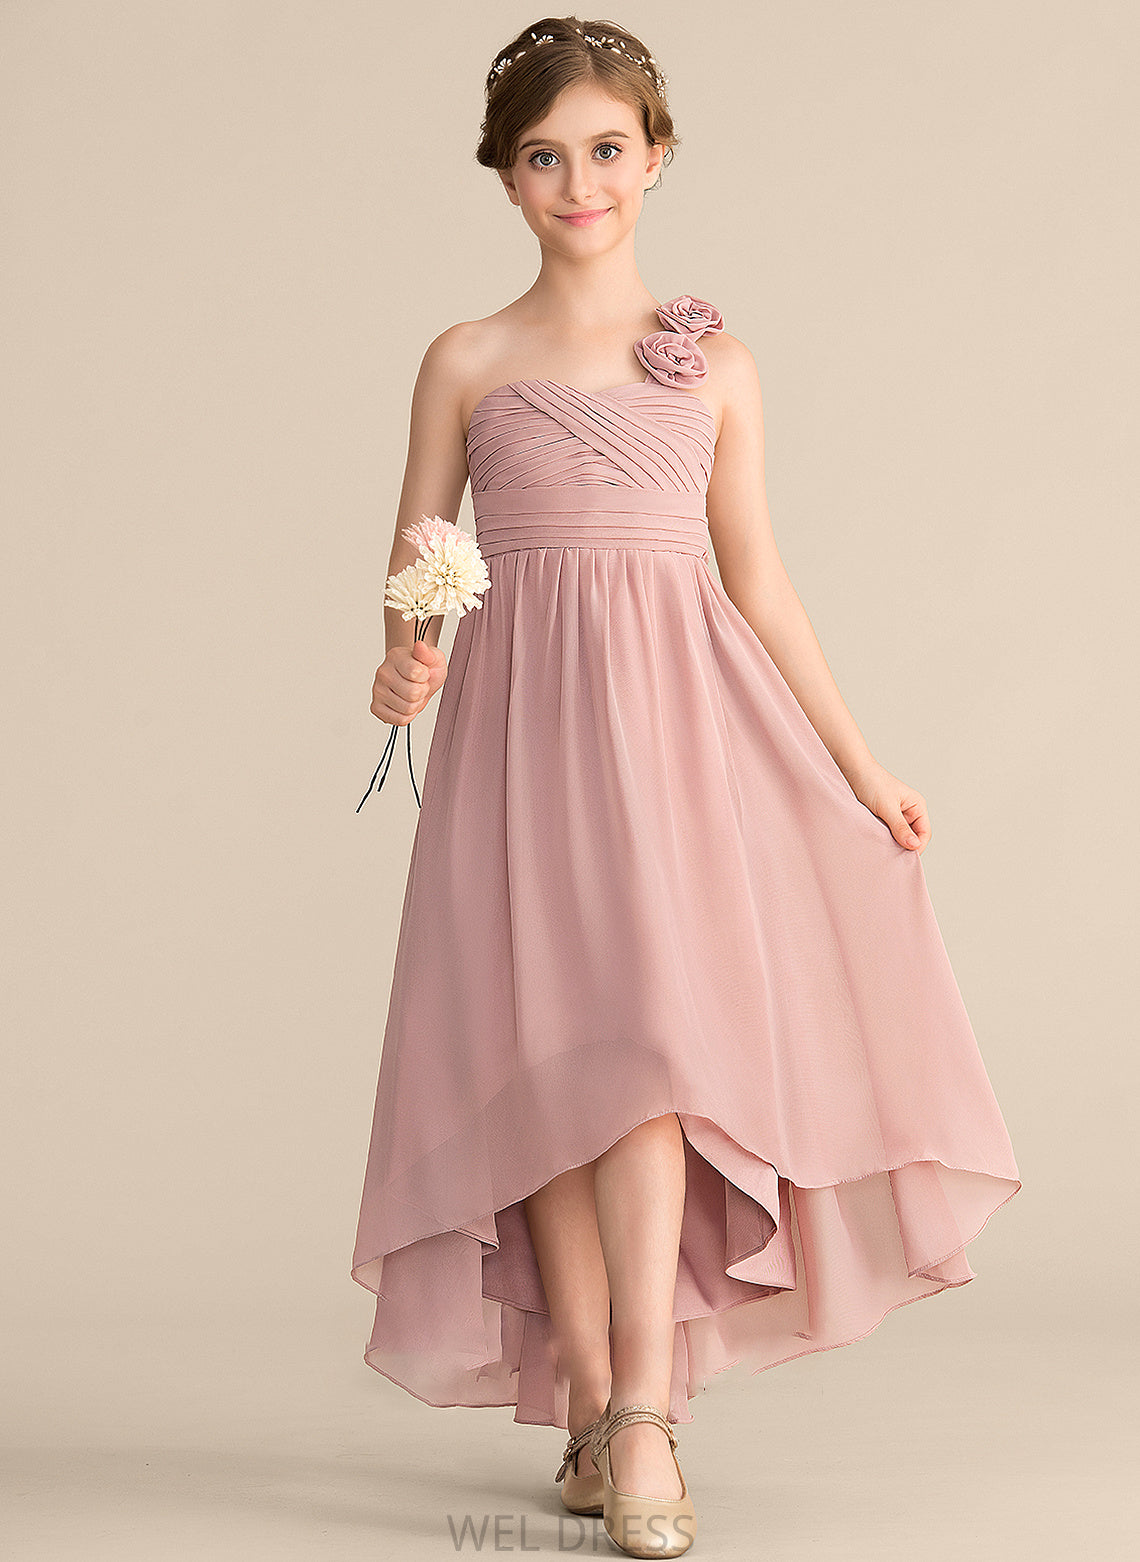 A-Line Flower(s) Ruffle Chiffon With Bow(s) Asymmetrical Junior Bridesmaid Dresses One-Shoulder Joy